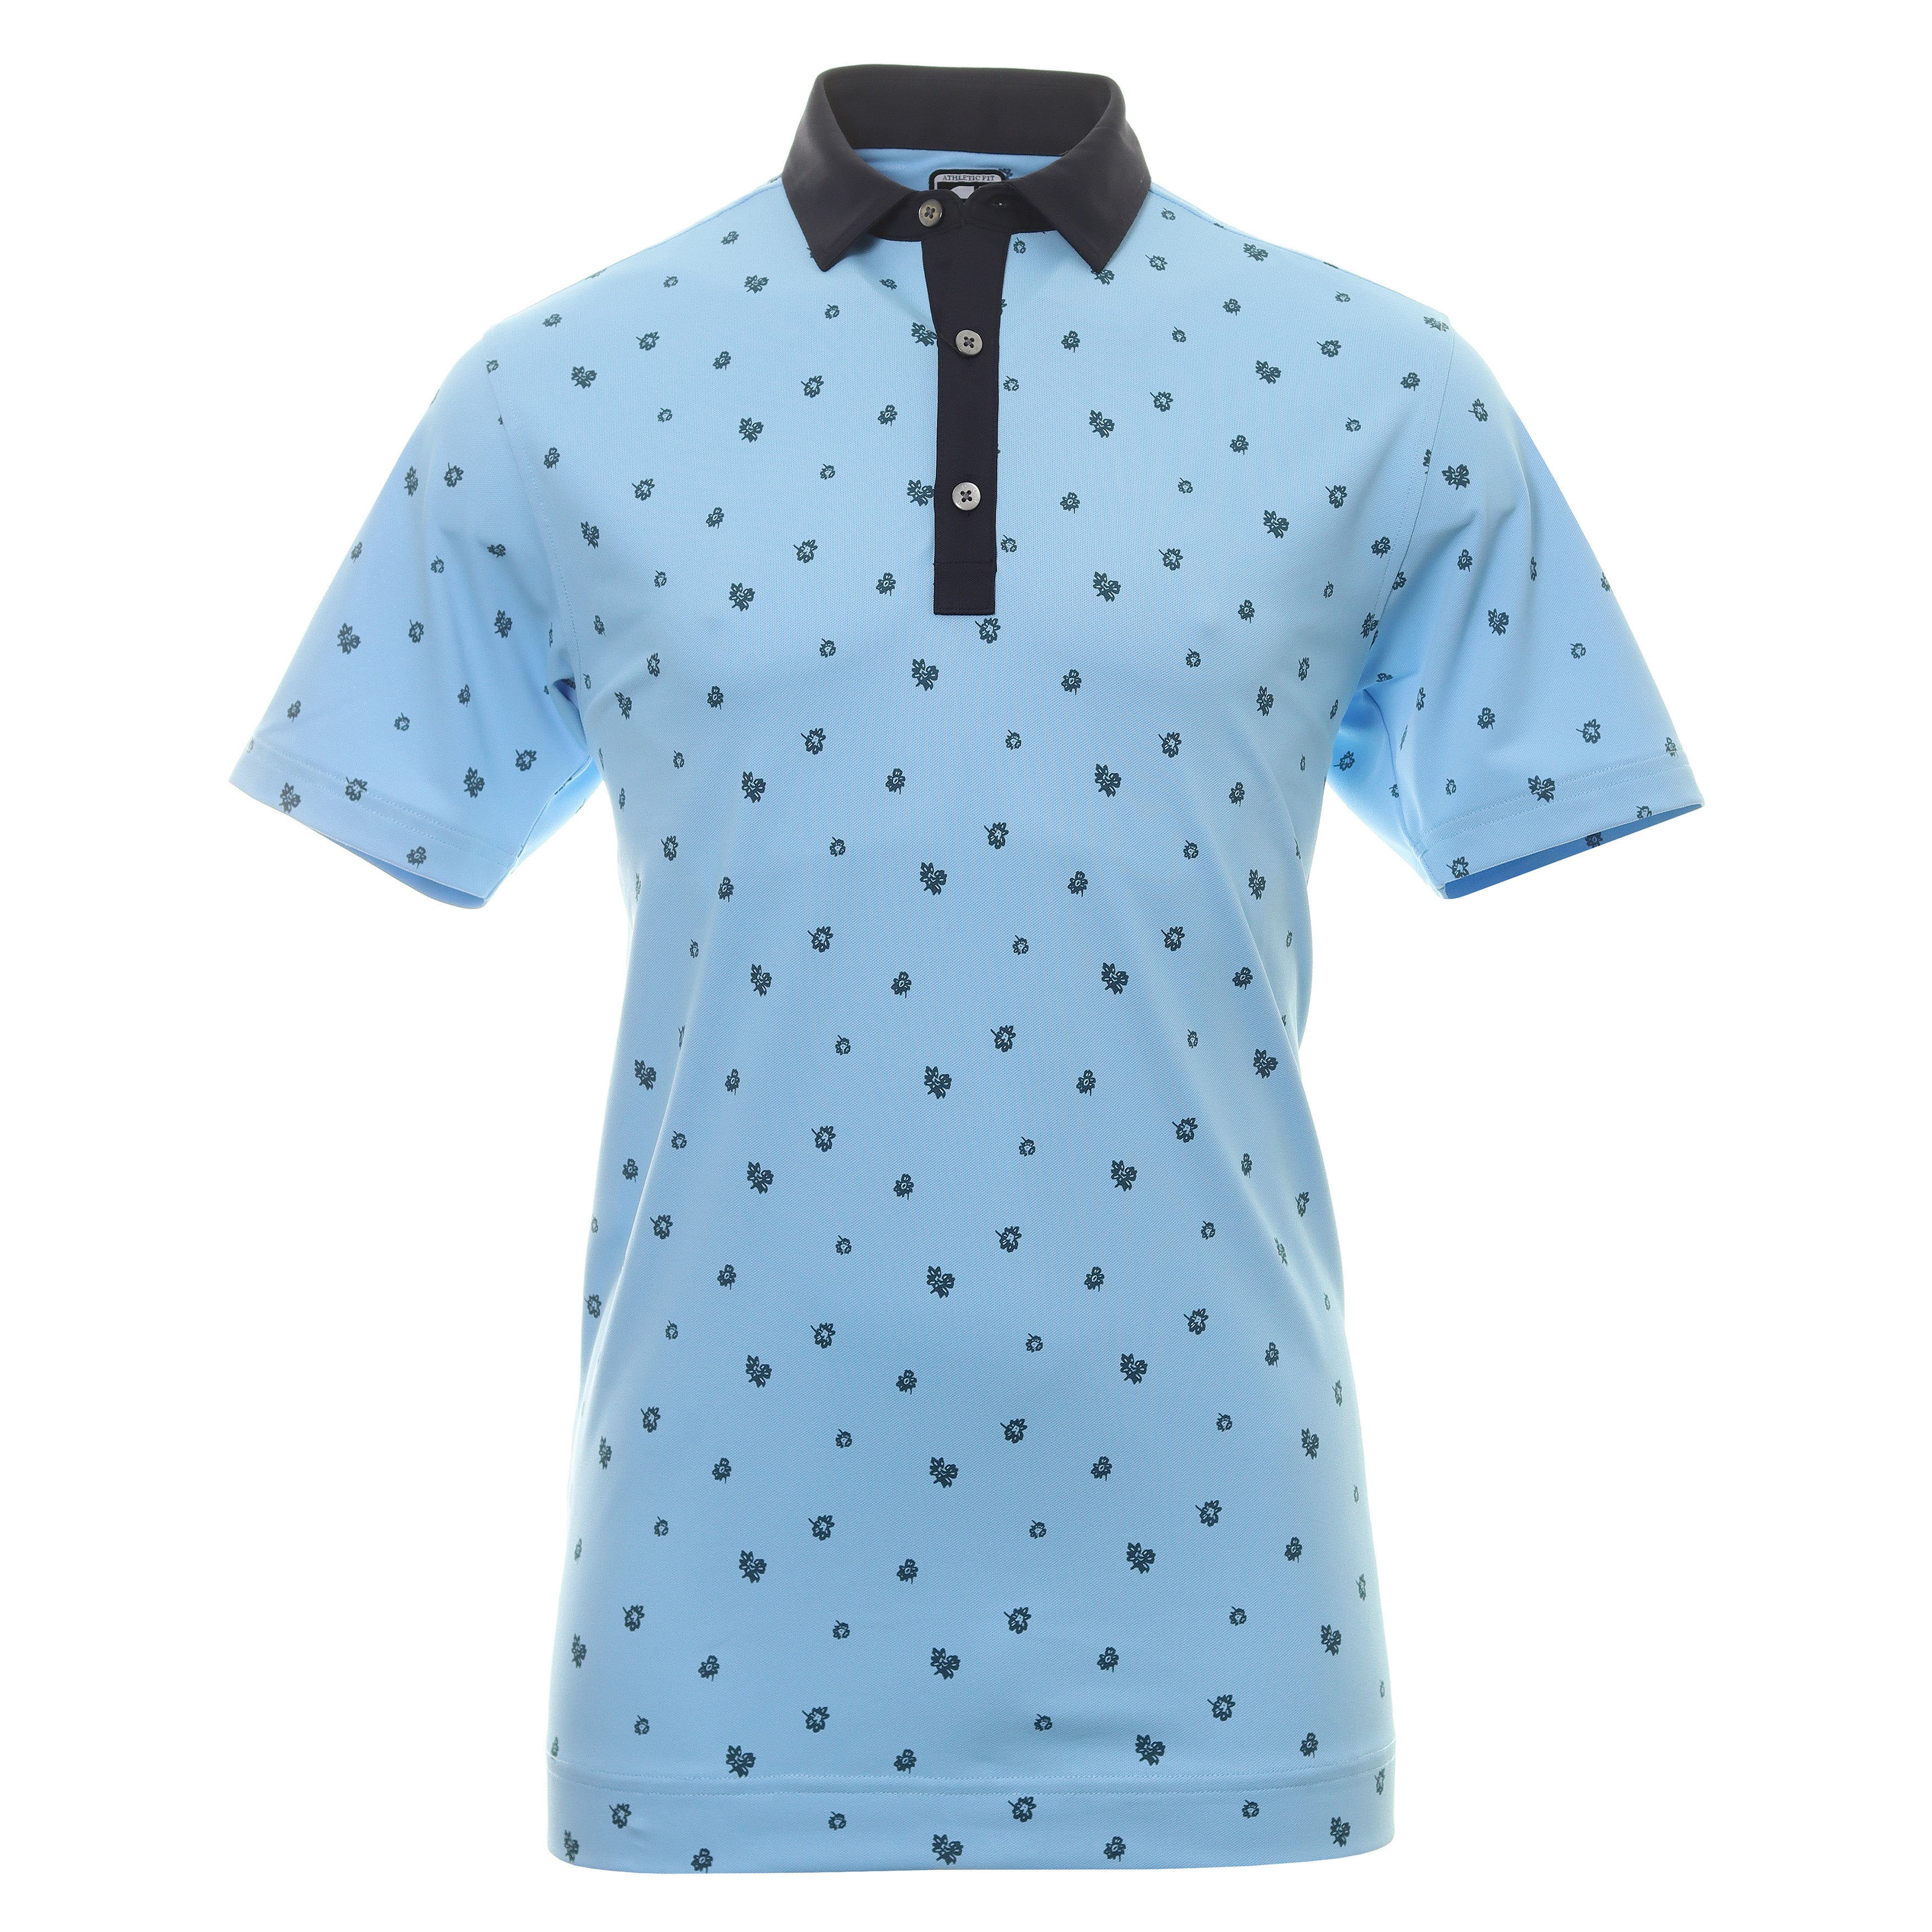 FootJoy Scattered Floral Pique Golf Shirt 80042 True Blue Navy | Function18